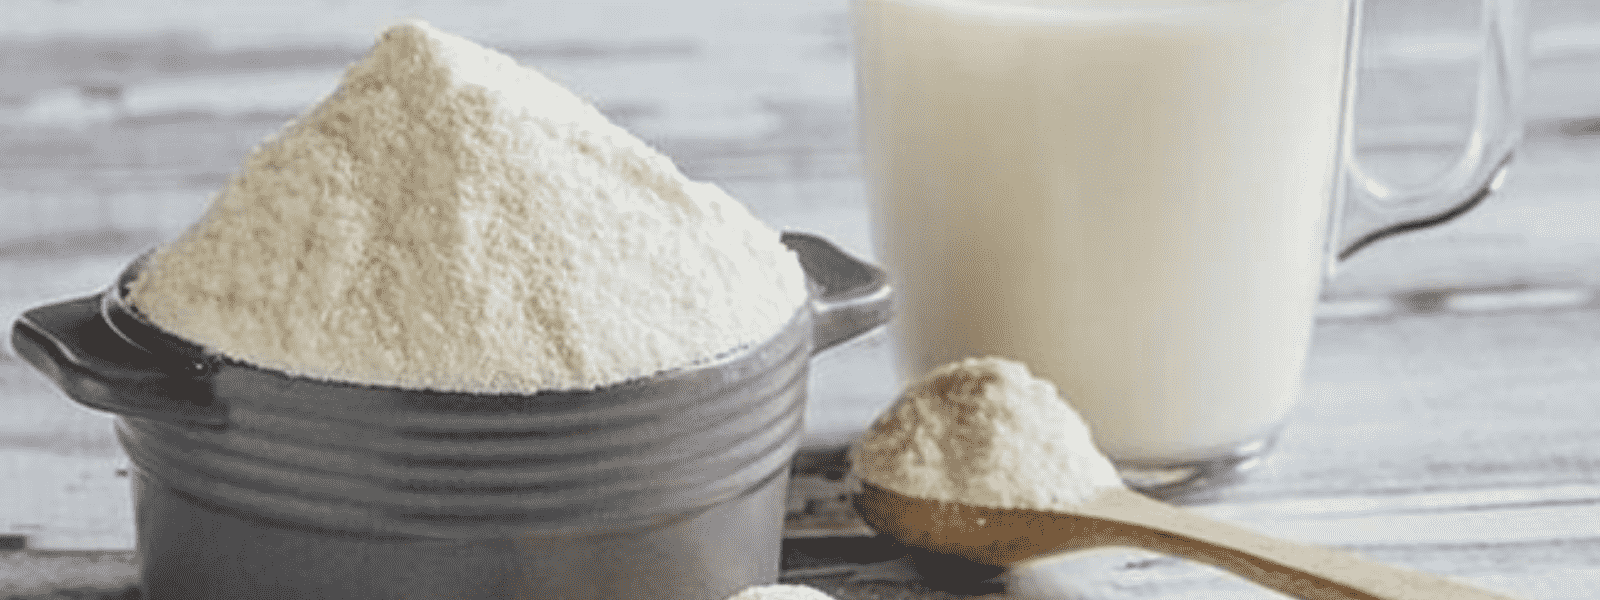 Imported Milk Powder Prices Drop